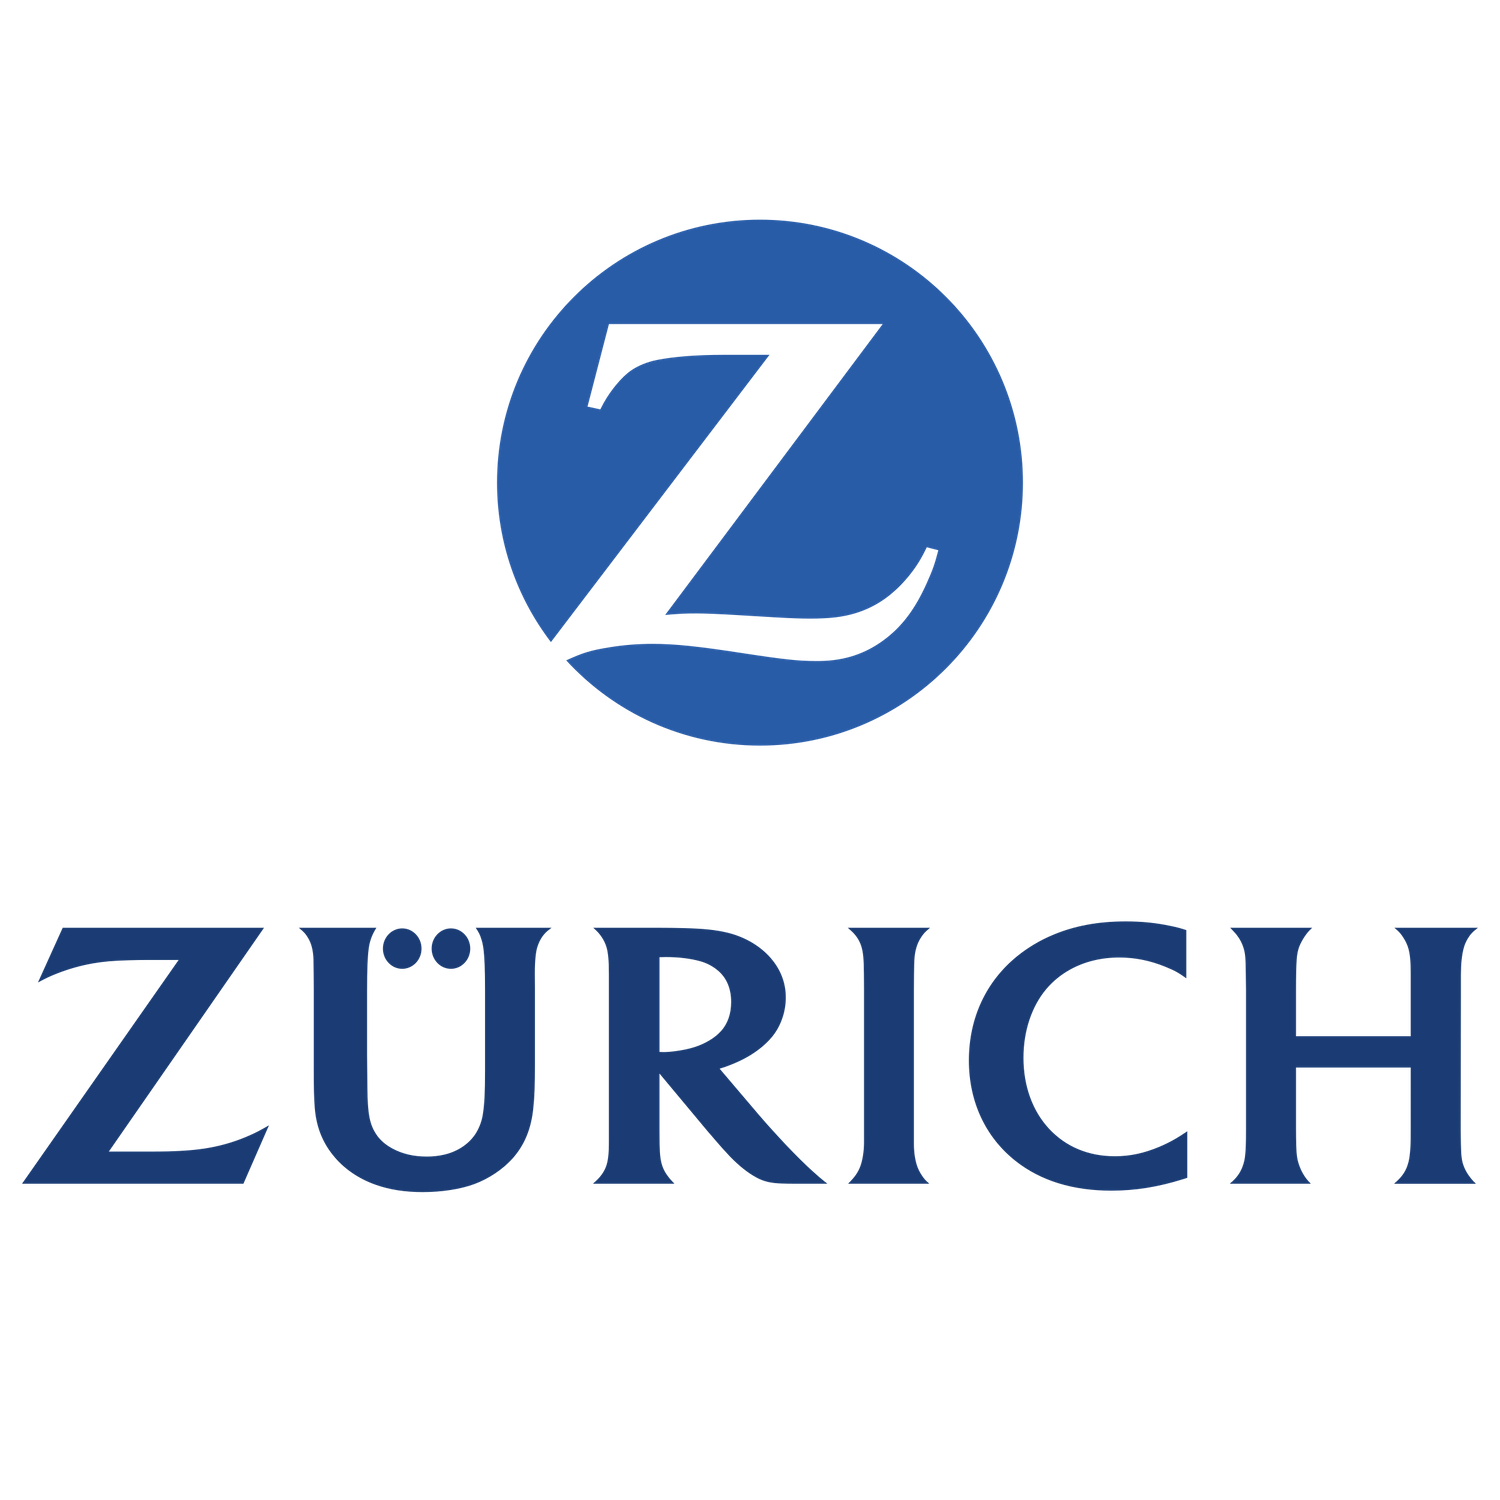 zurich-4-logo-png-transparent.png